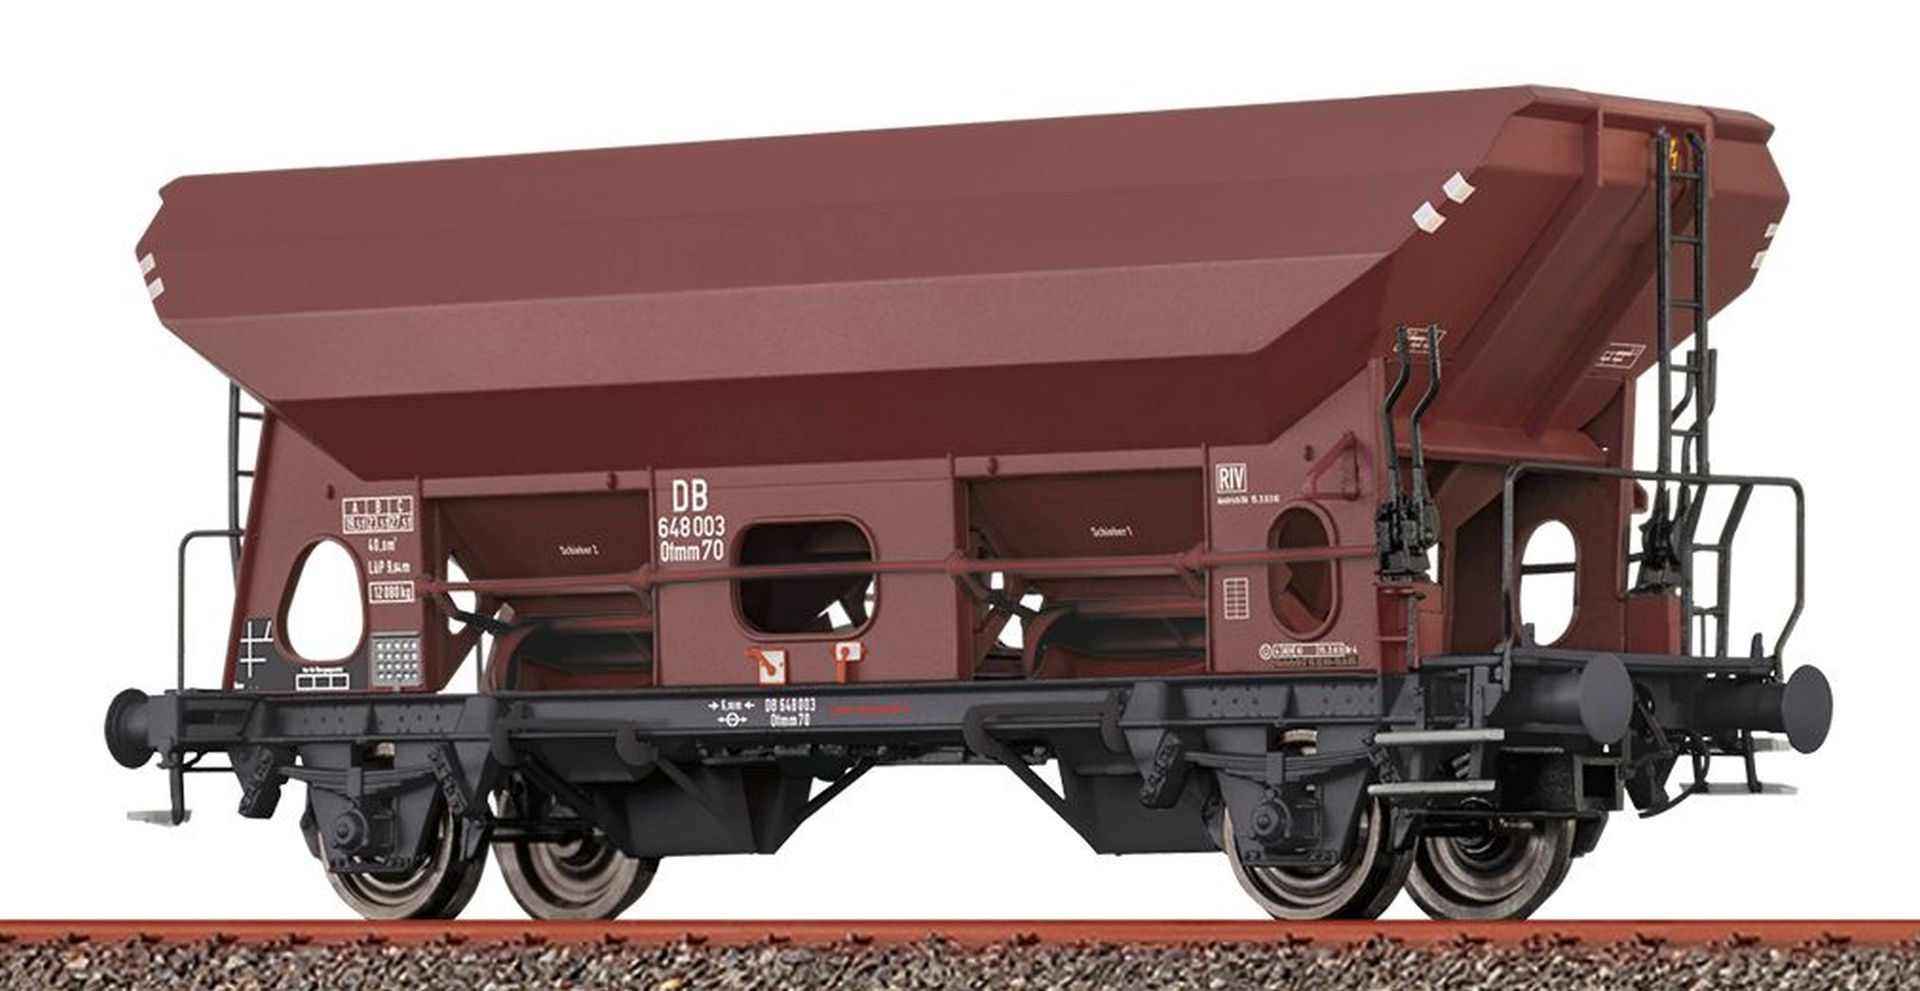 Brawa 49559 - Offener Güterwagen Otmm70, DB, Ep.III